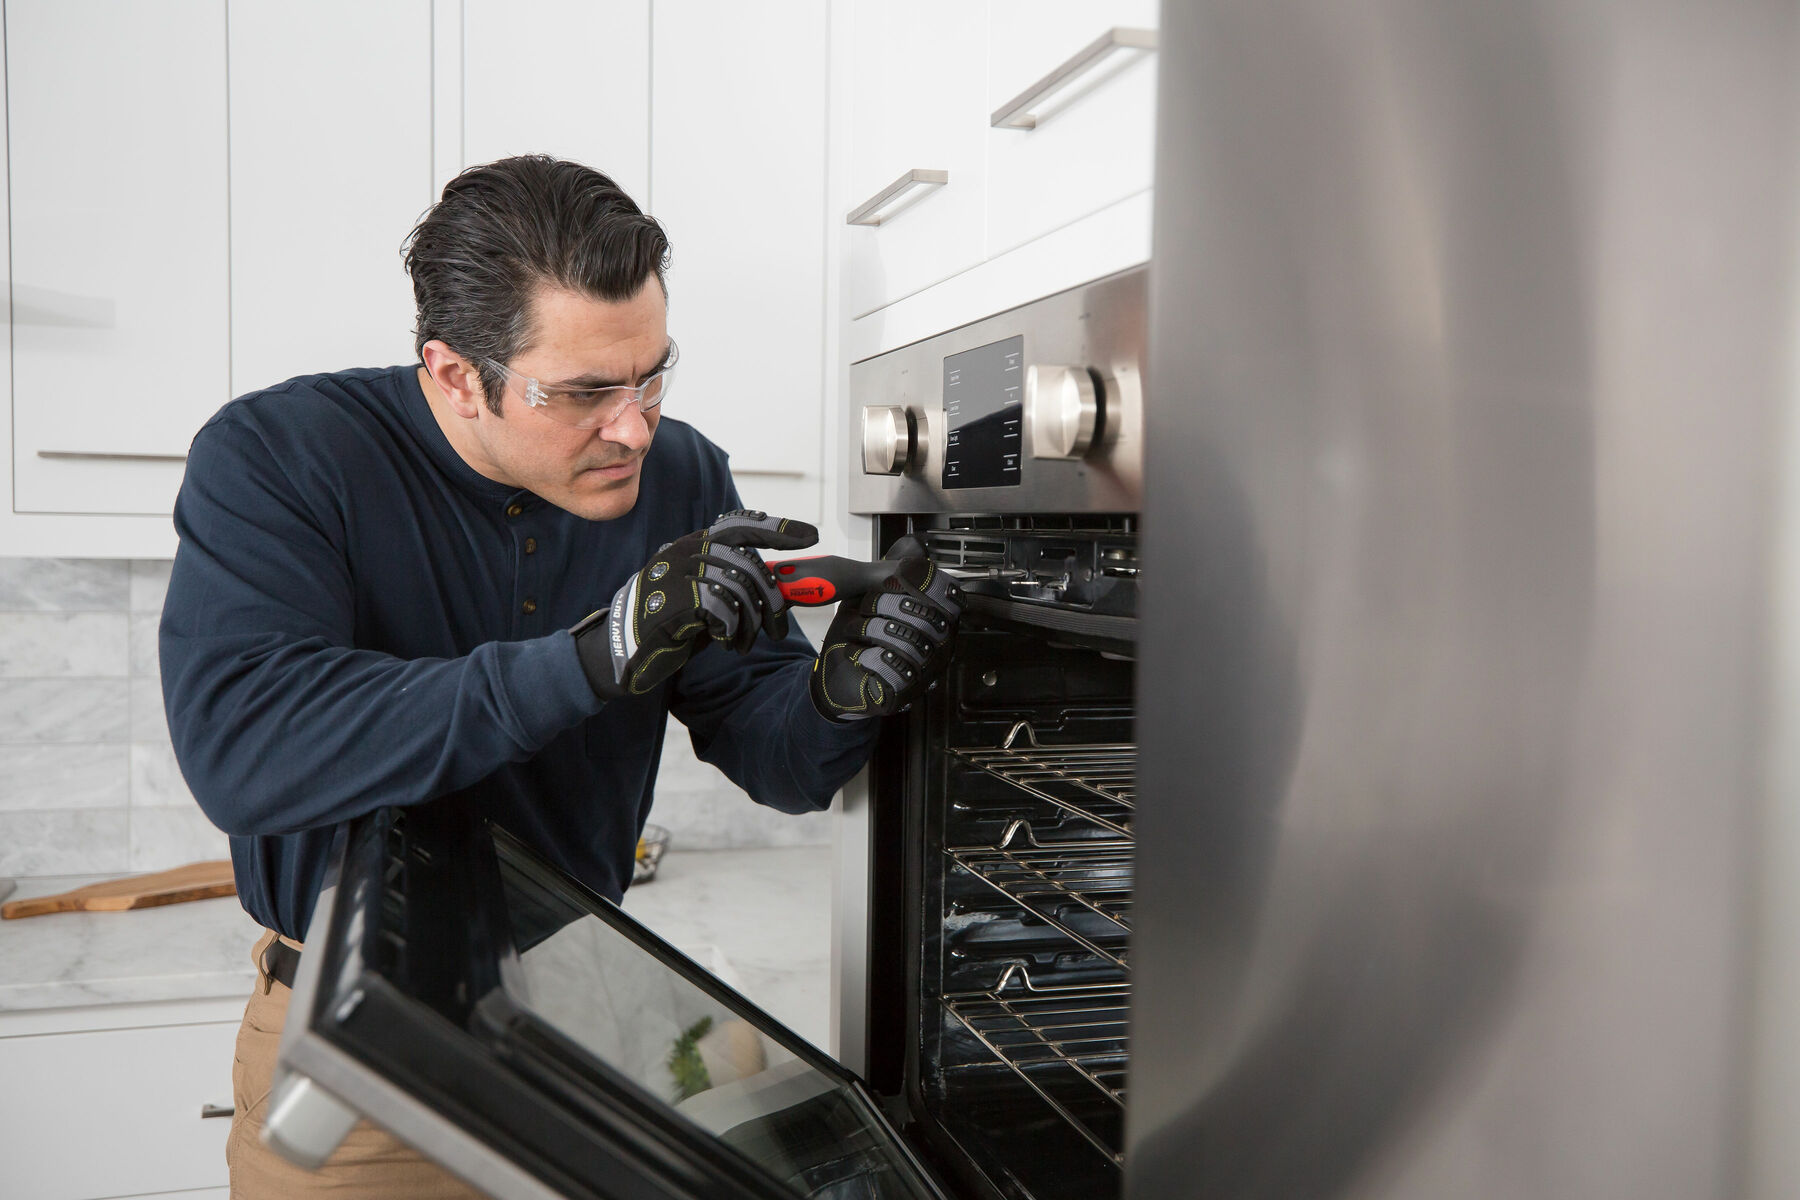 Appliance Warranty Insurance Should You Insure Your